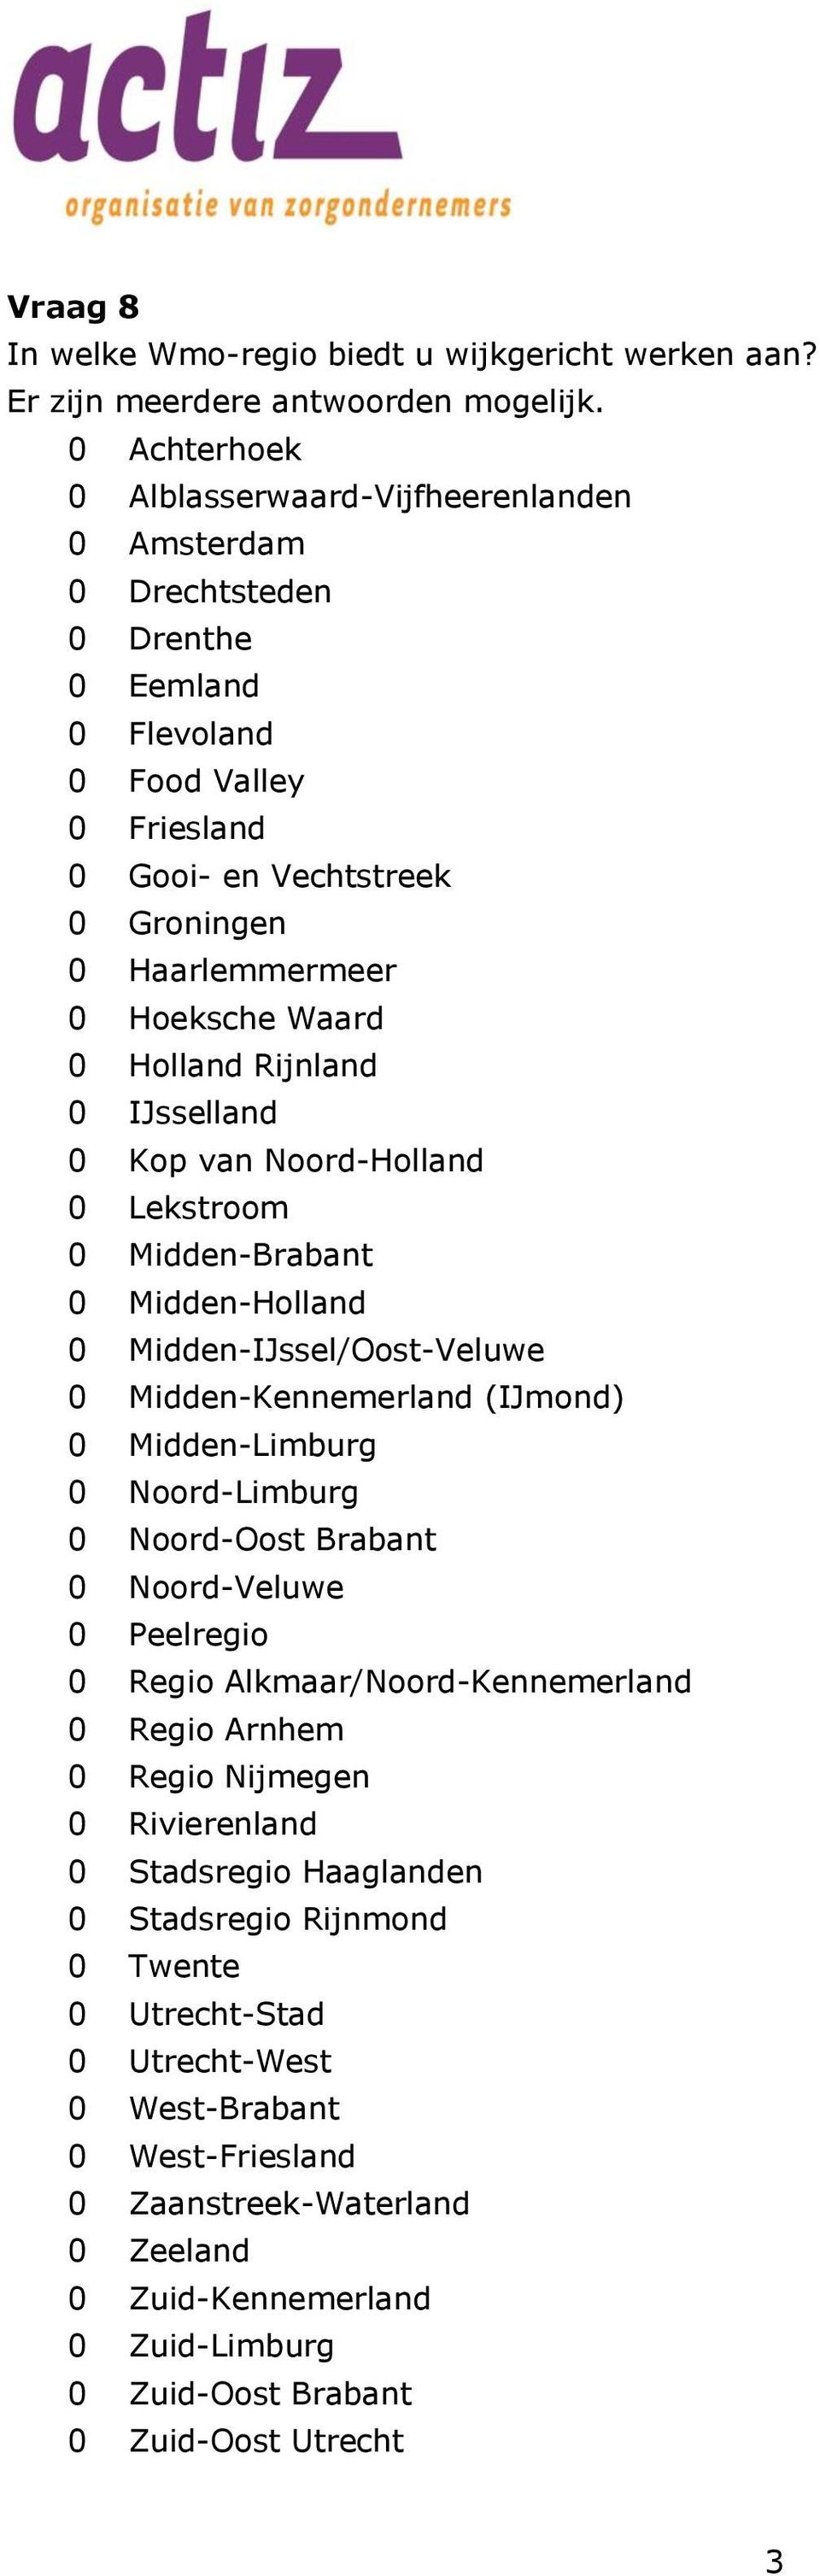 Waard 0 Holland Rijnland 0 IJsselland 0 Kop van Noord-Holland 0 Lekstroom 0 Midden-Brabant 0 Midden-Holland 0 Midden-IJssel/Oost-Veluwe 0 Midden-Kennemerland (IJmond) 0 Midden-Limburg 0 Noord-Limburg